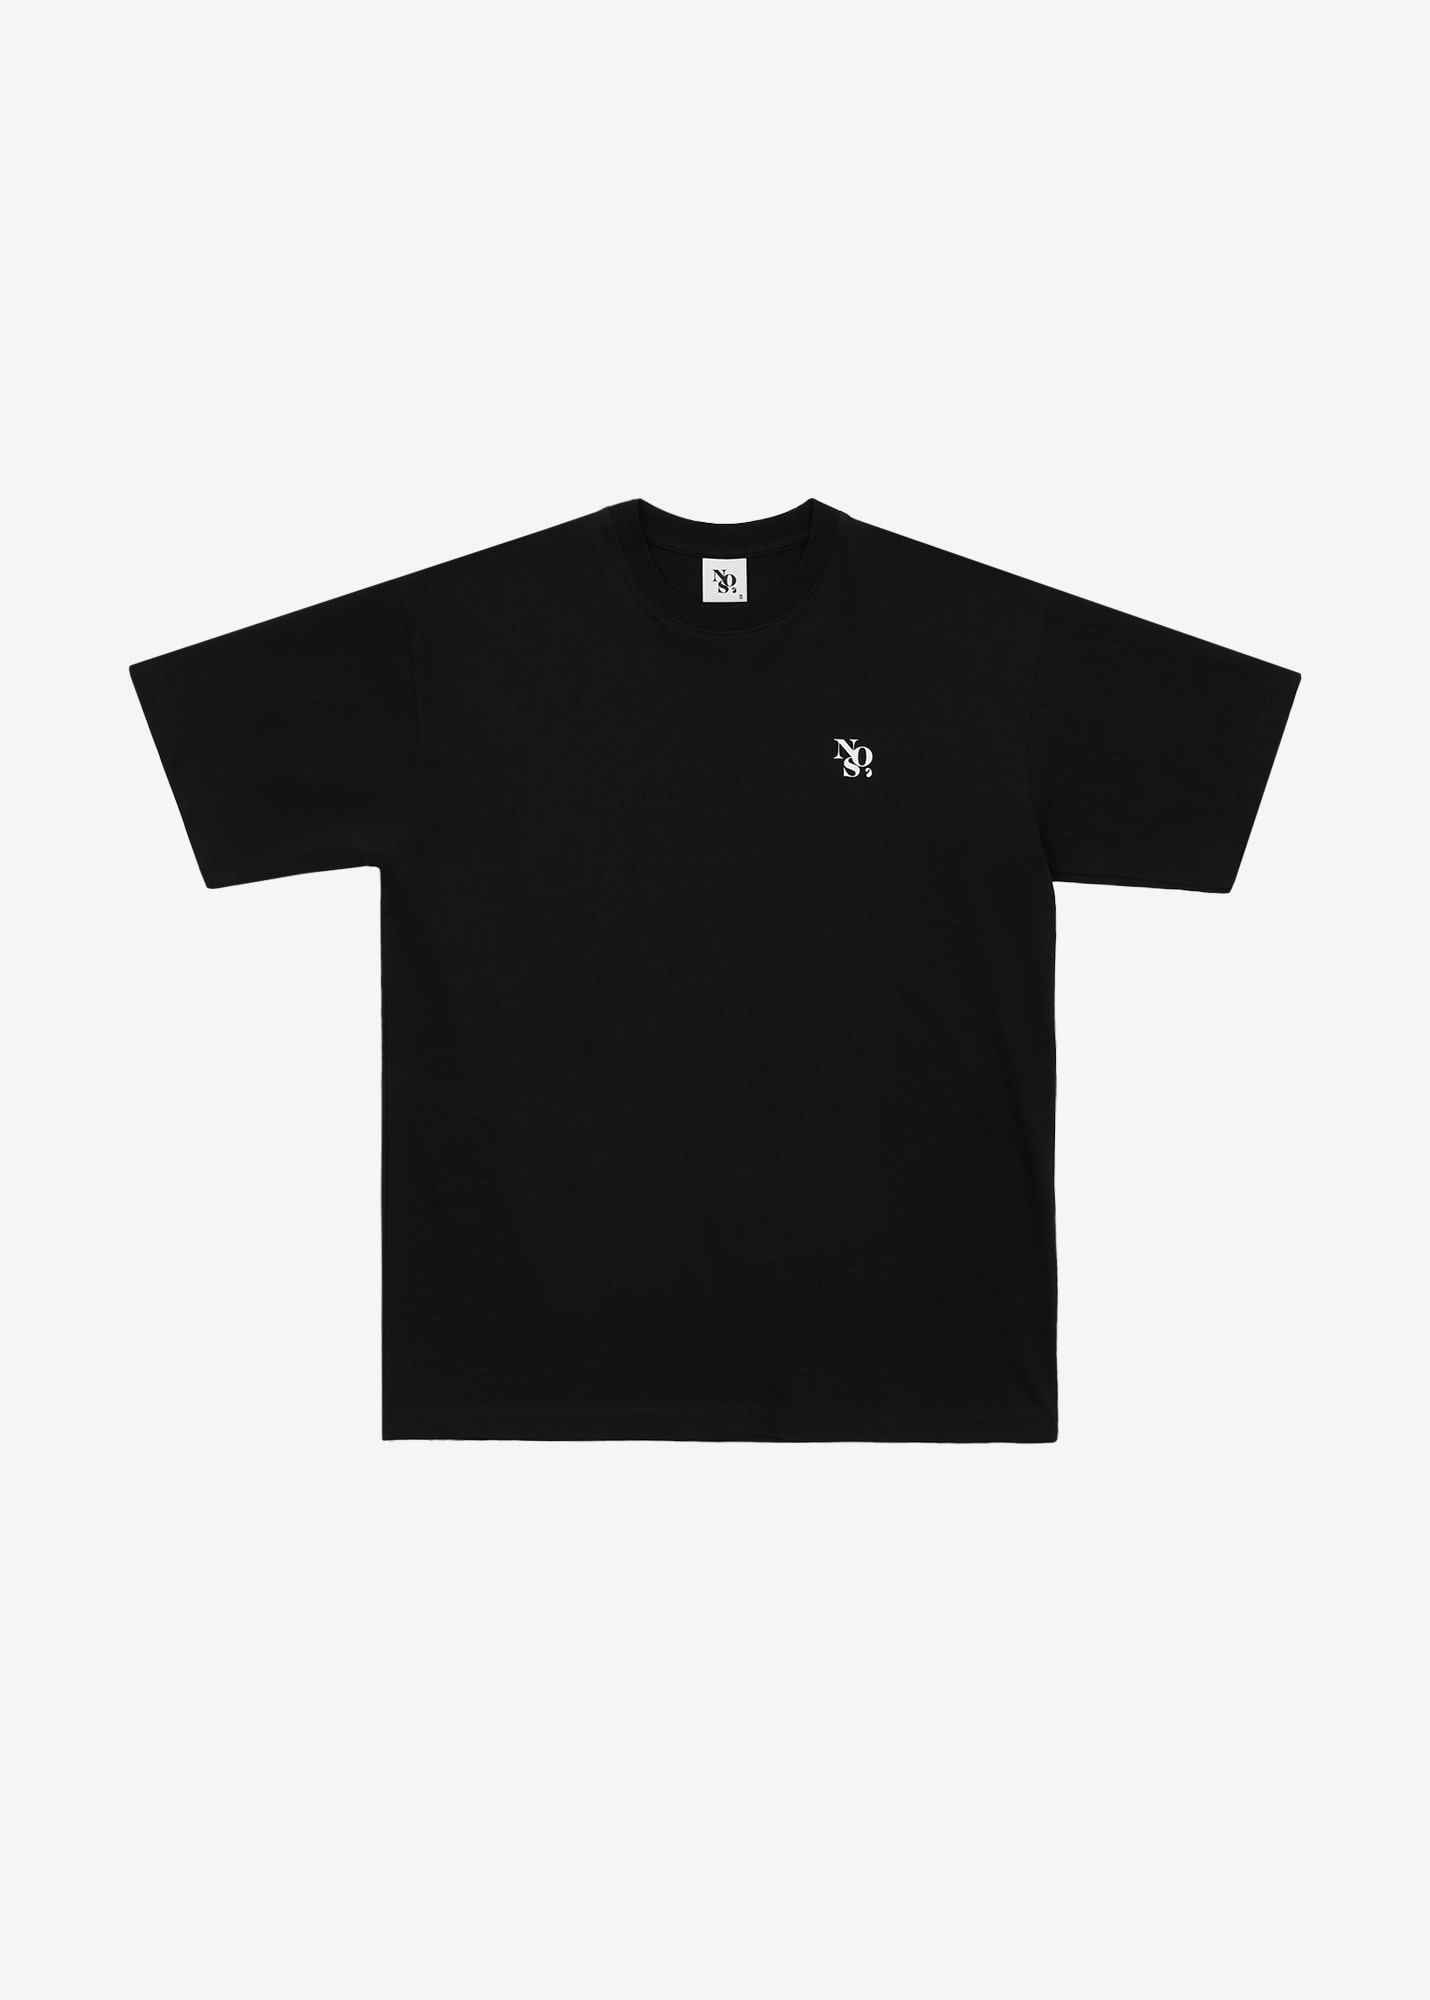 NOS7 렉트 티셔츠 - 블랙